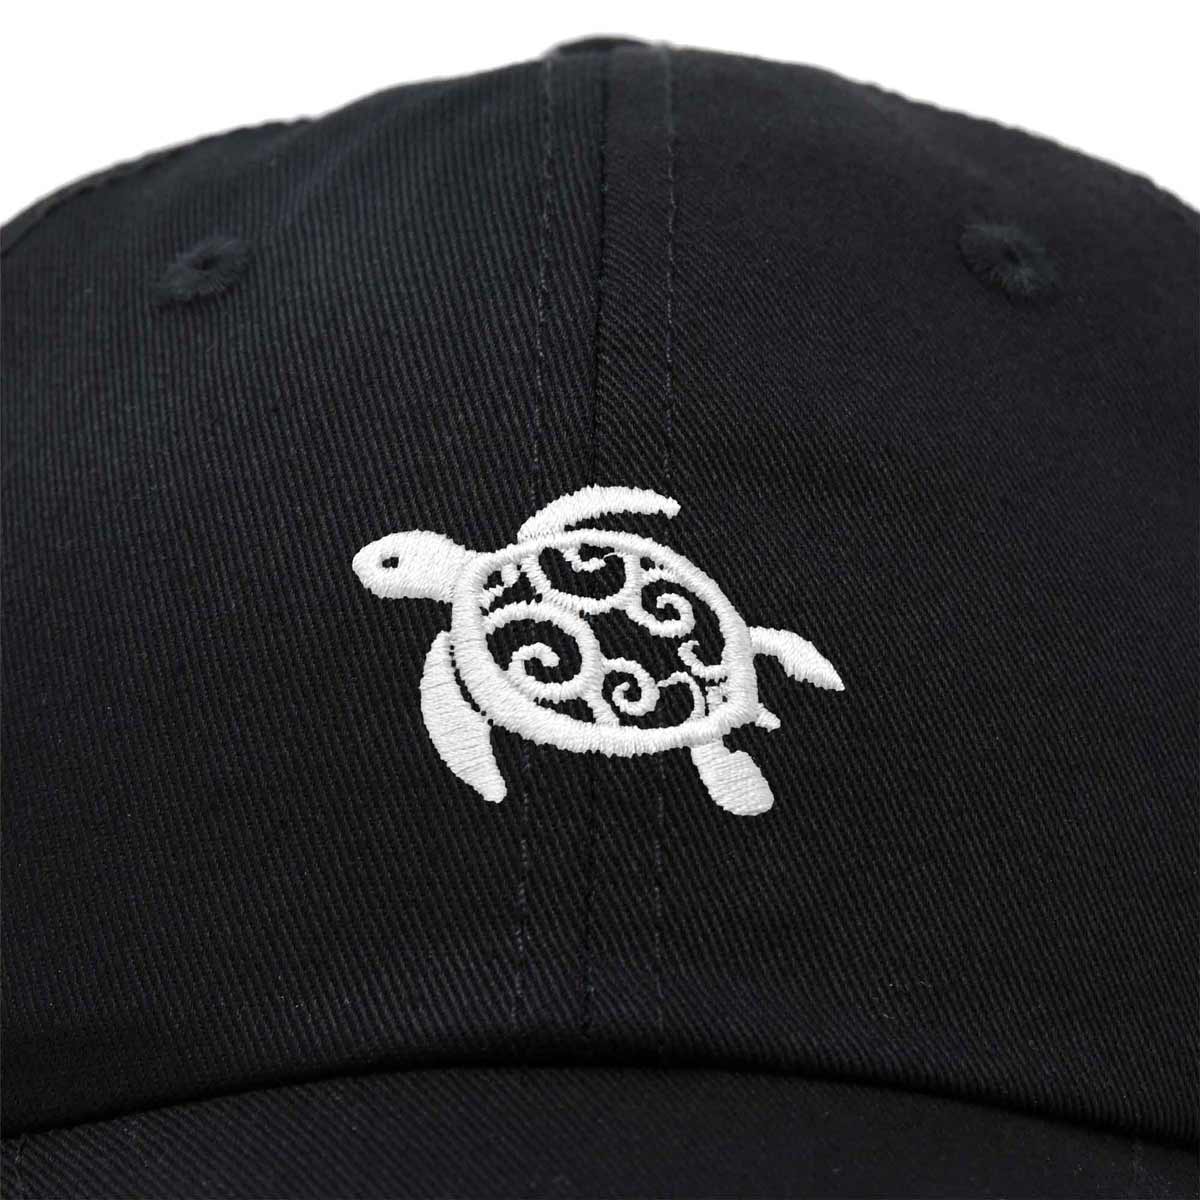 Dalix Turtle Hat